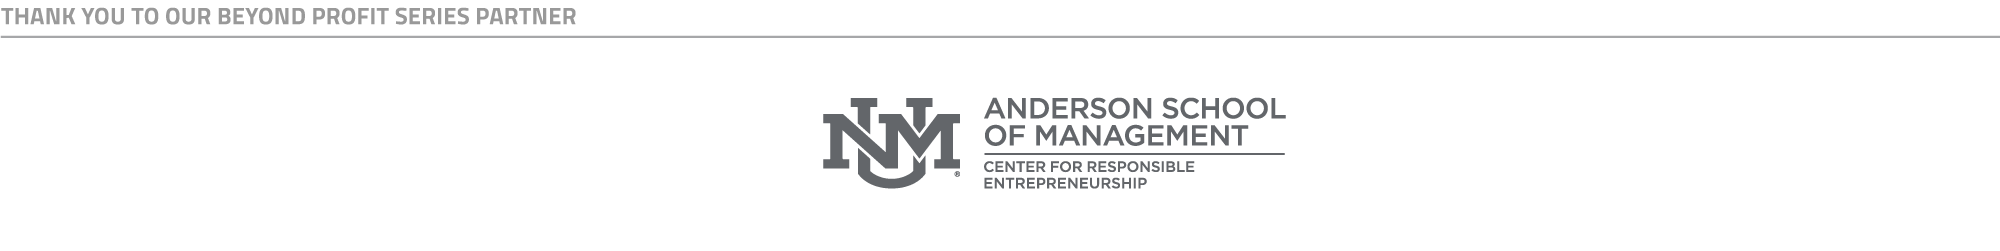 UNM Center for Responsible Entrepreneurship is our Beyond Profit Partner